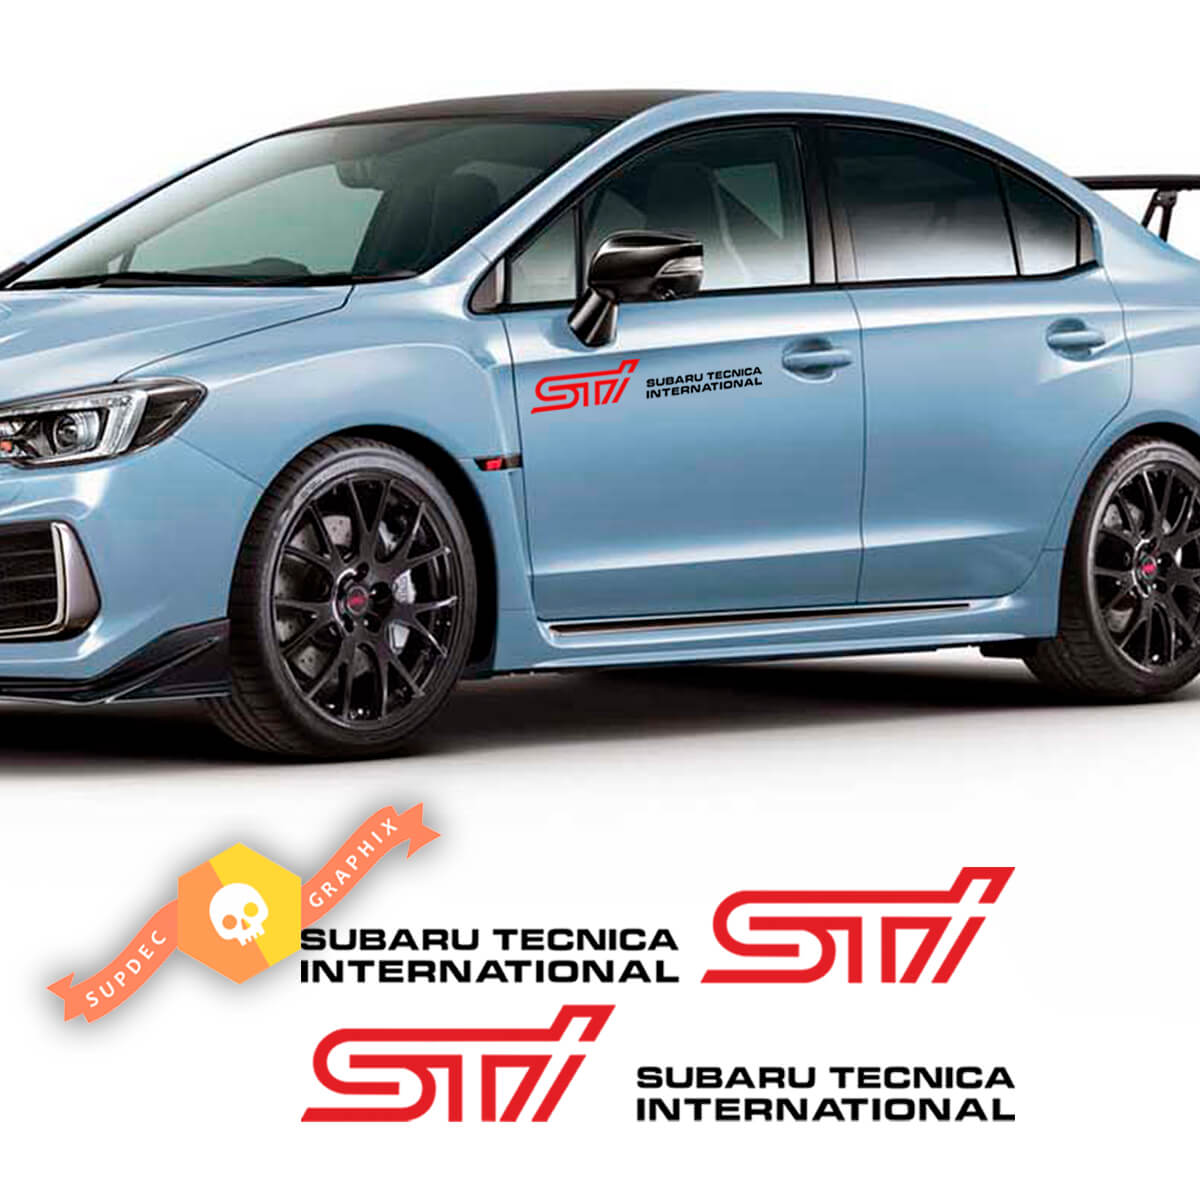 2X STI Subaru Tecnica International Dors Cover Vinyl Decals Stickers